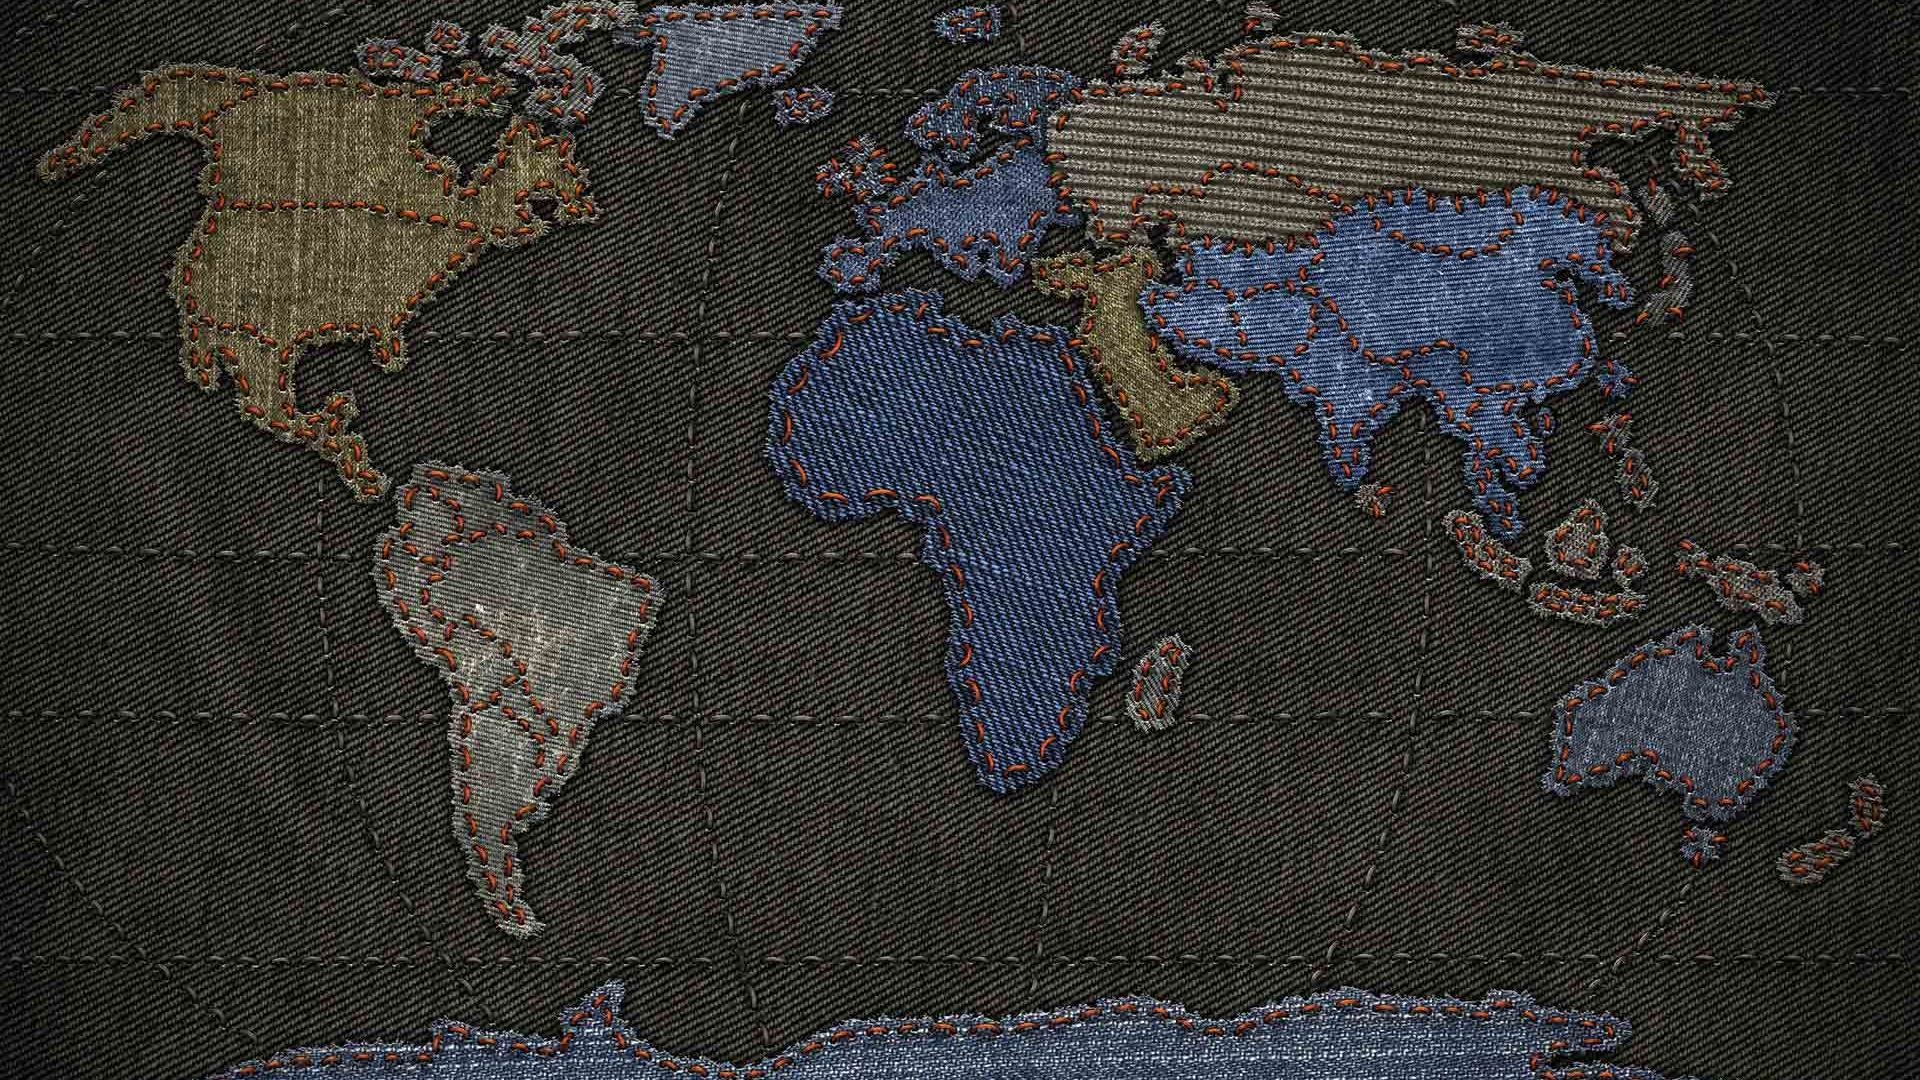 1920x1080   Cool world Map desktop wallpaper free download wide  wallpapers :1280x800,1440x900,